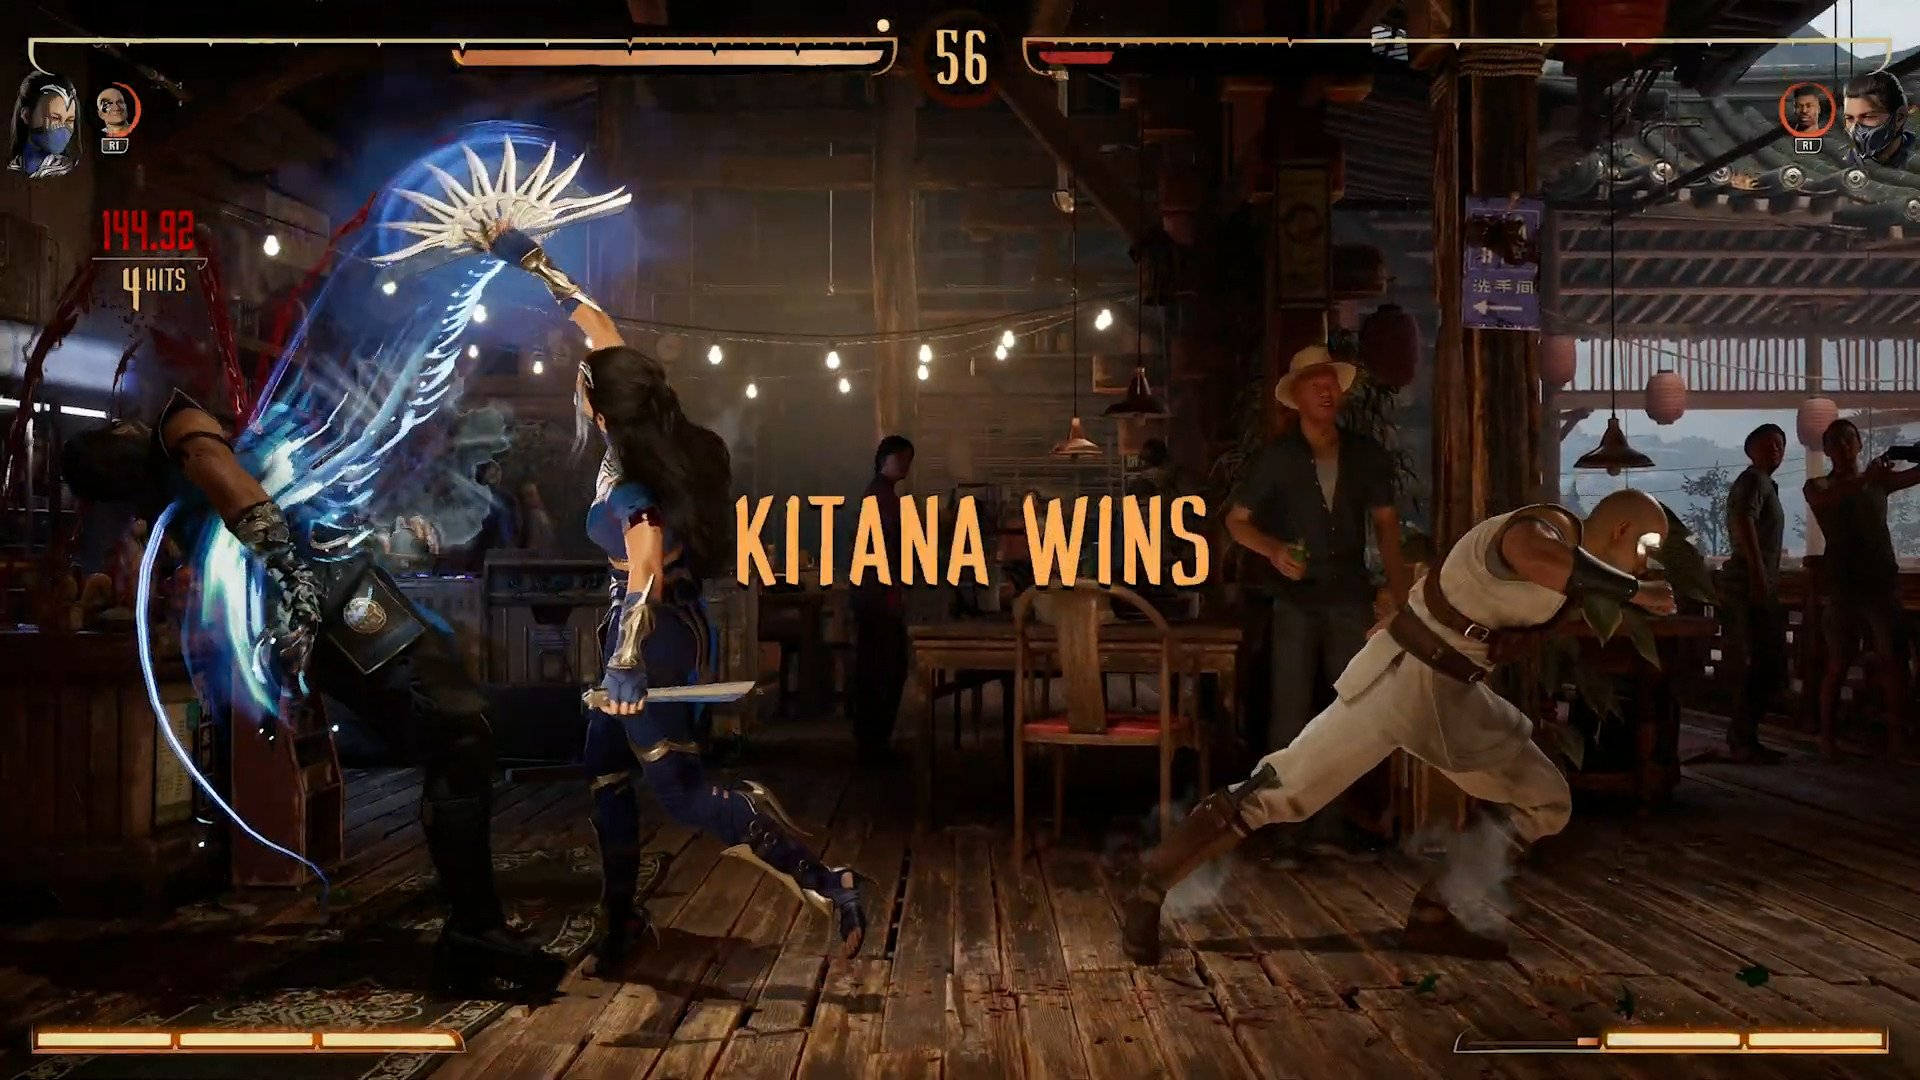 Kitana wins a match against Sub Zero in Mortal Kombat 1